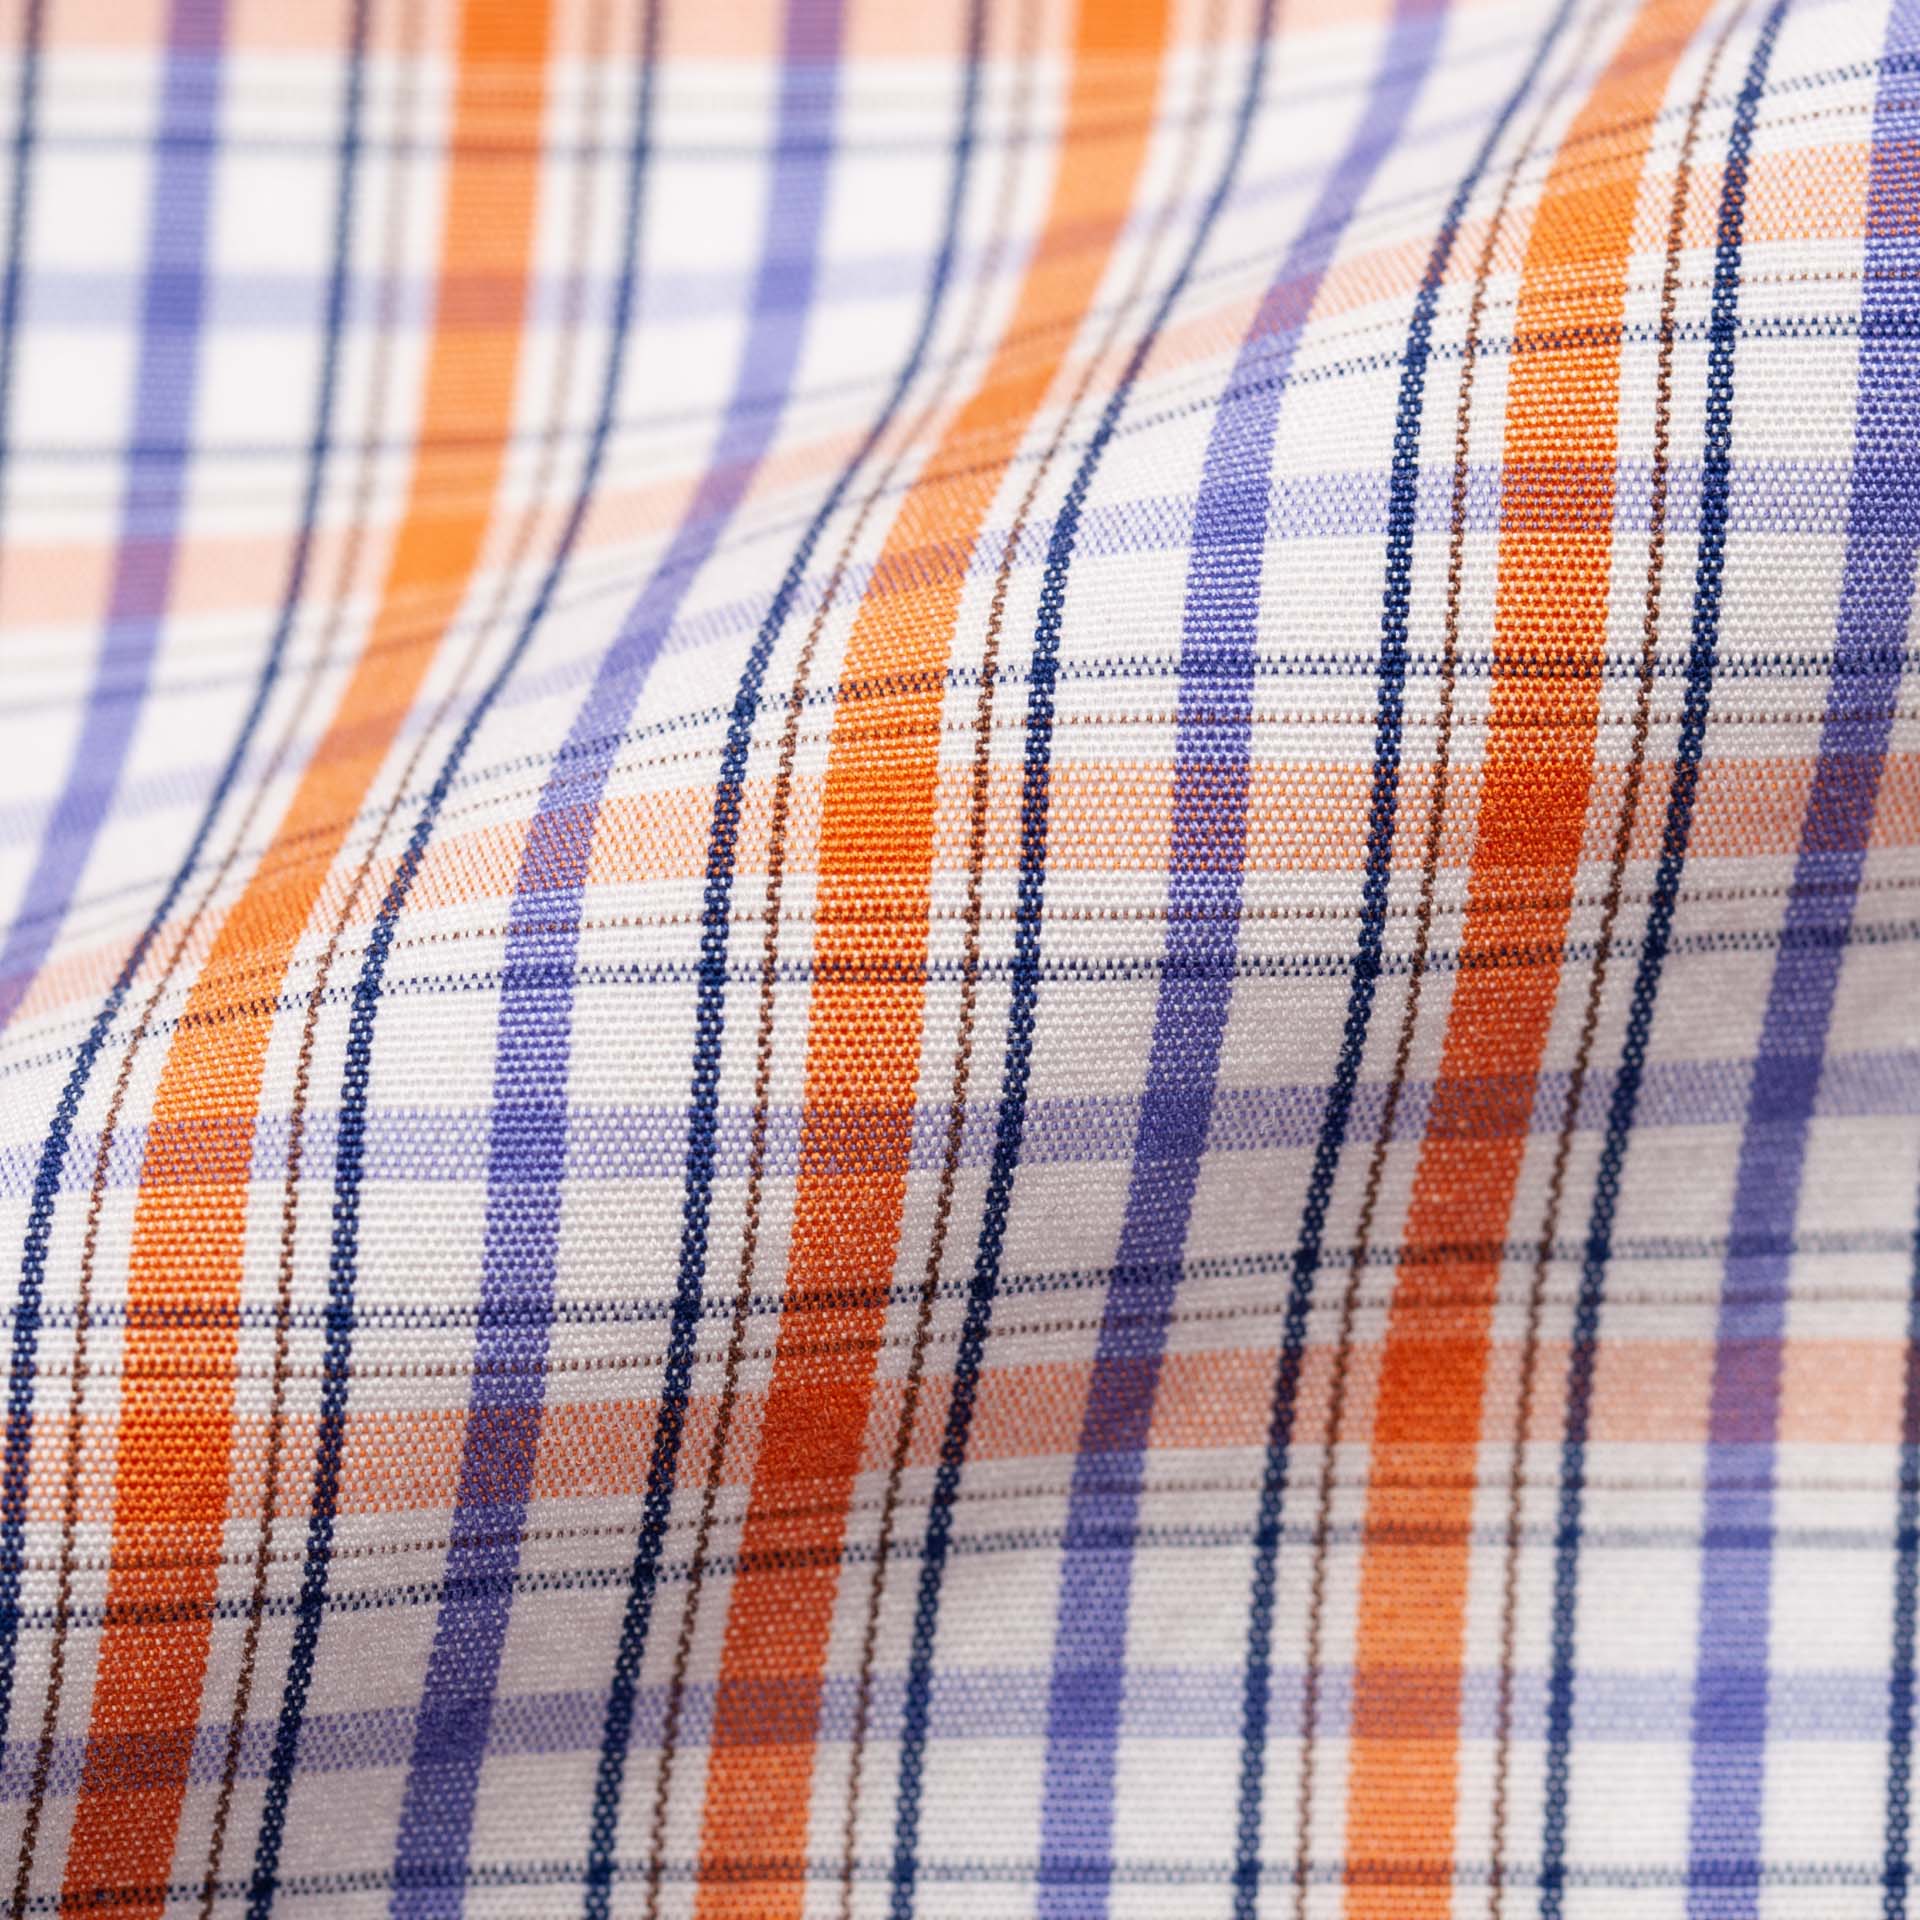 JAY KOS New York Multi-Color Plaid Cotton Shirt EU 41 US 16 Slim Fit